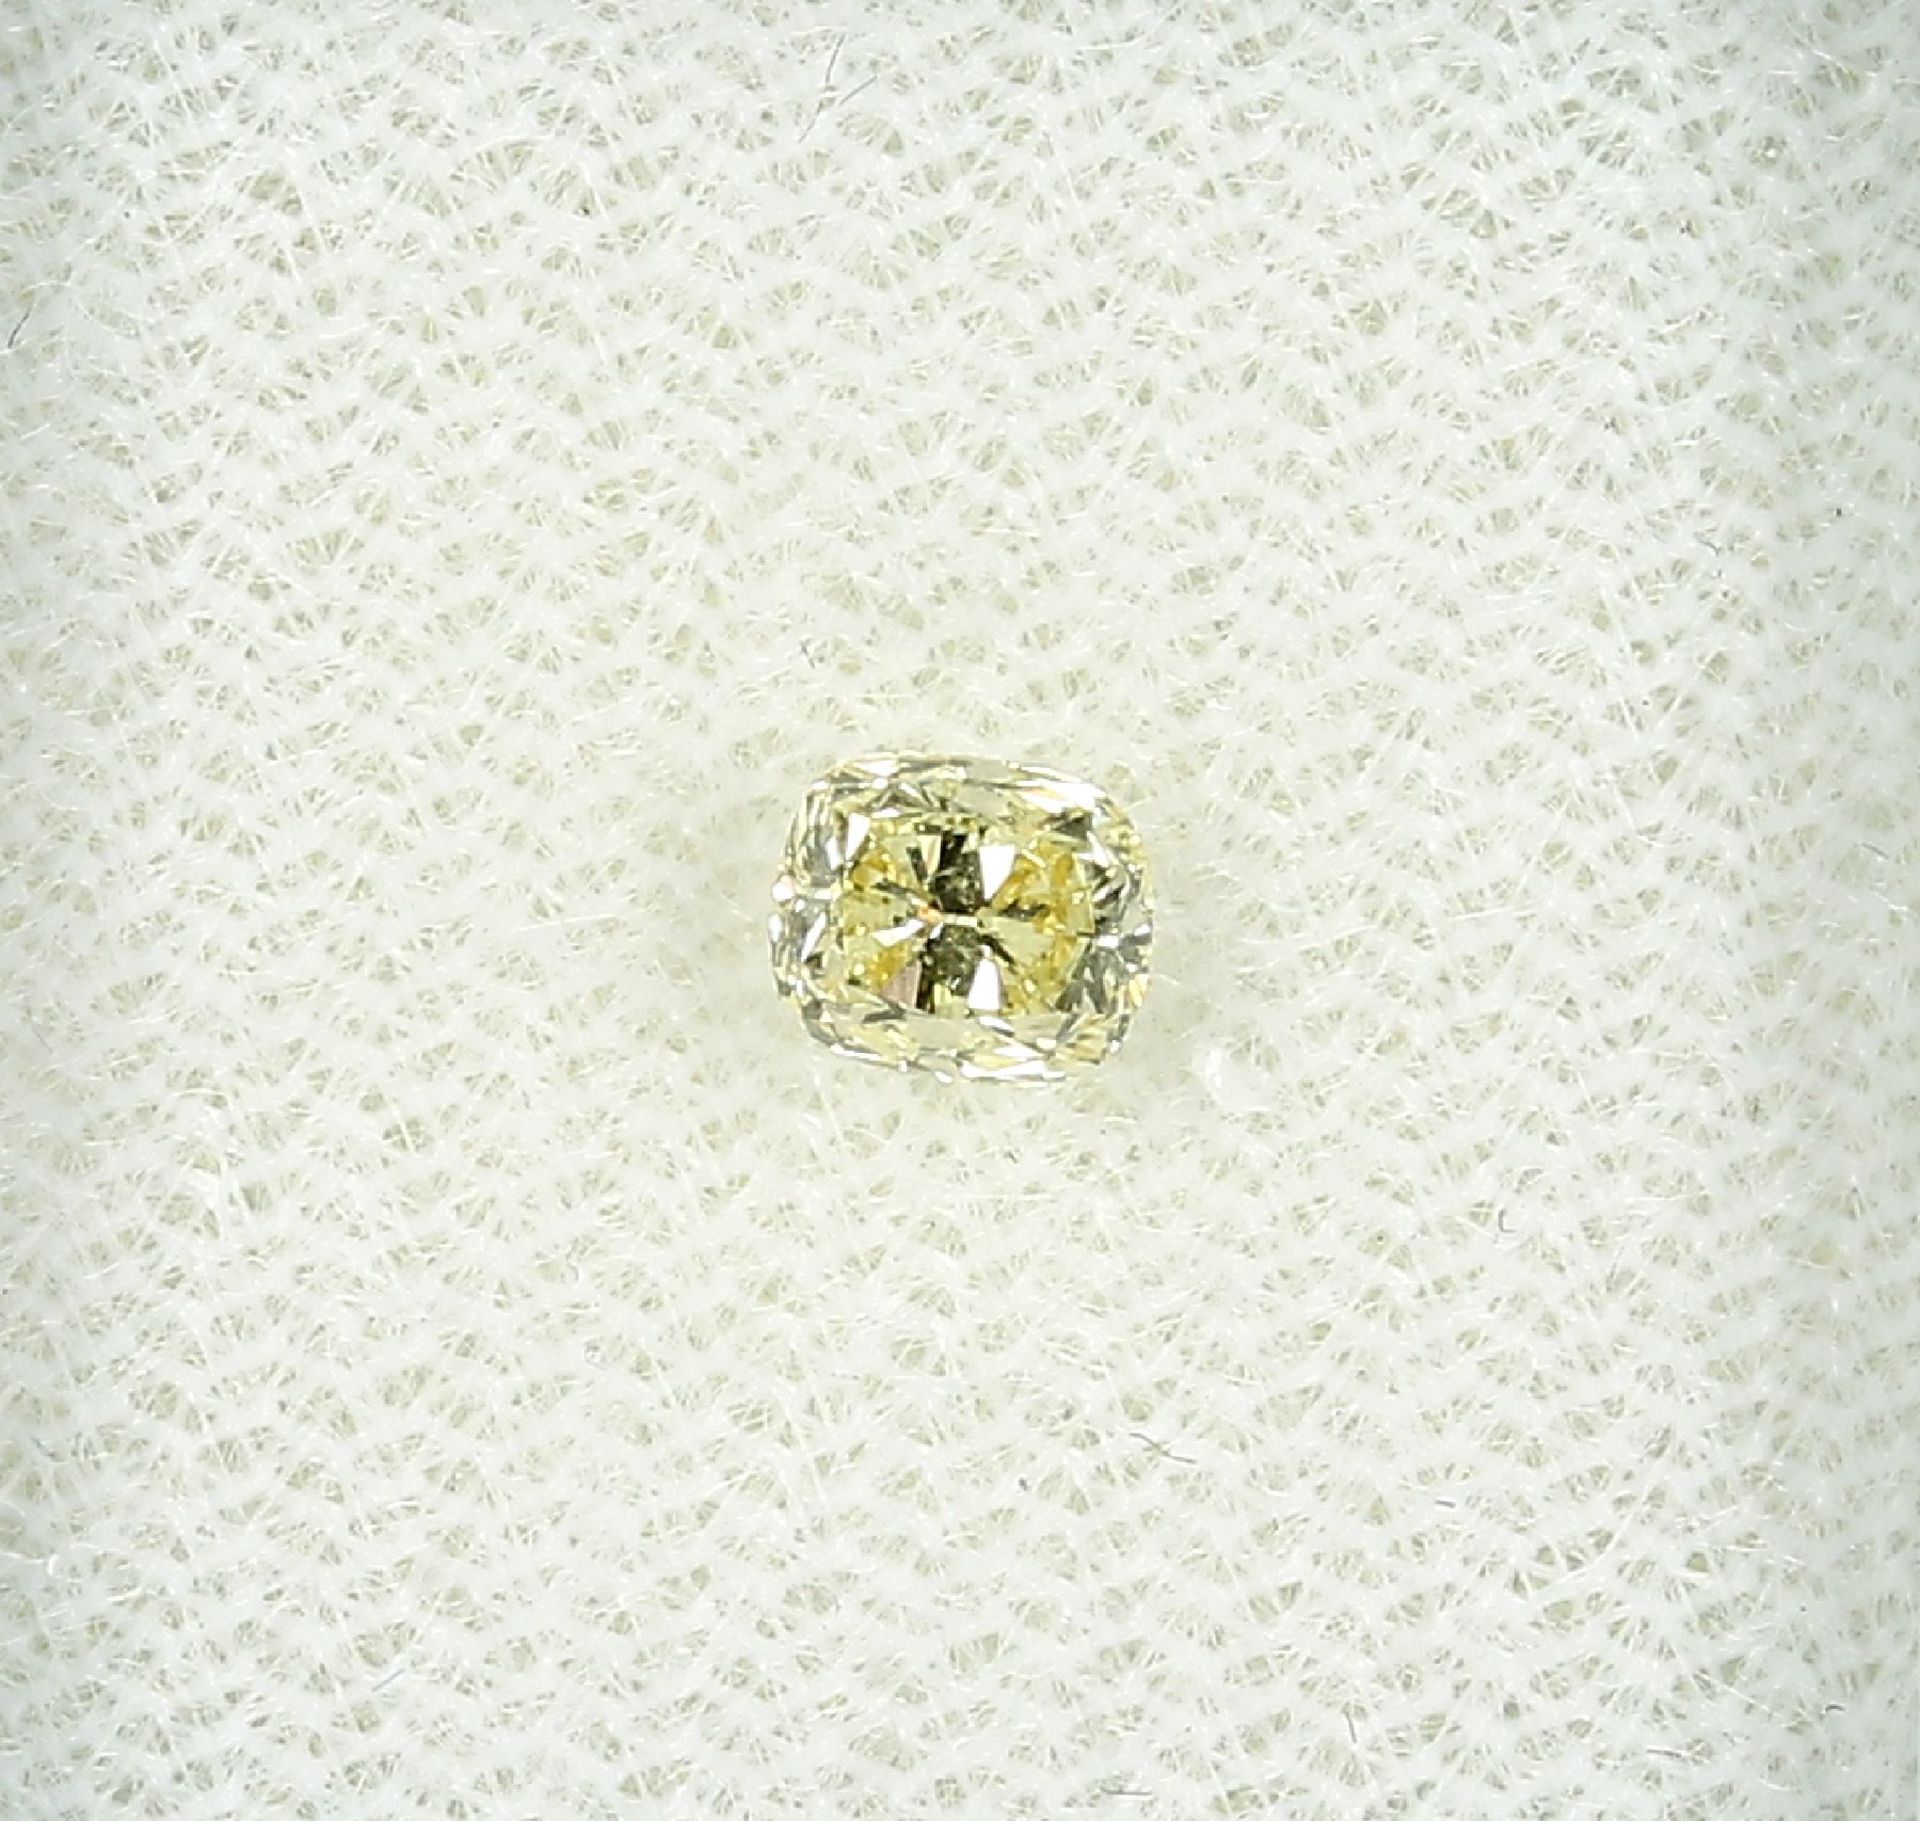 Loser Diamant, 0.39 ct Natural fancy yellow/si2, Kissenschliff, 4.30 x 3.66 x 2.99 mm, mit GIA-